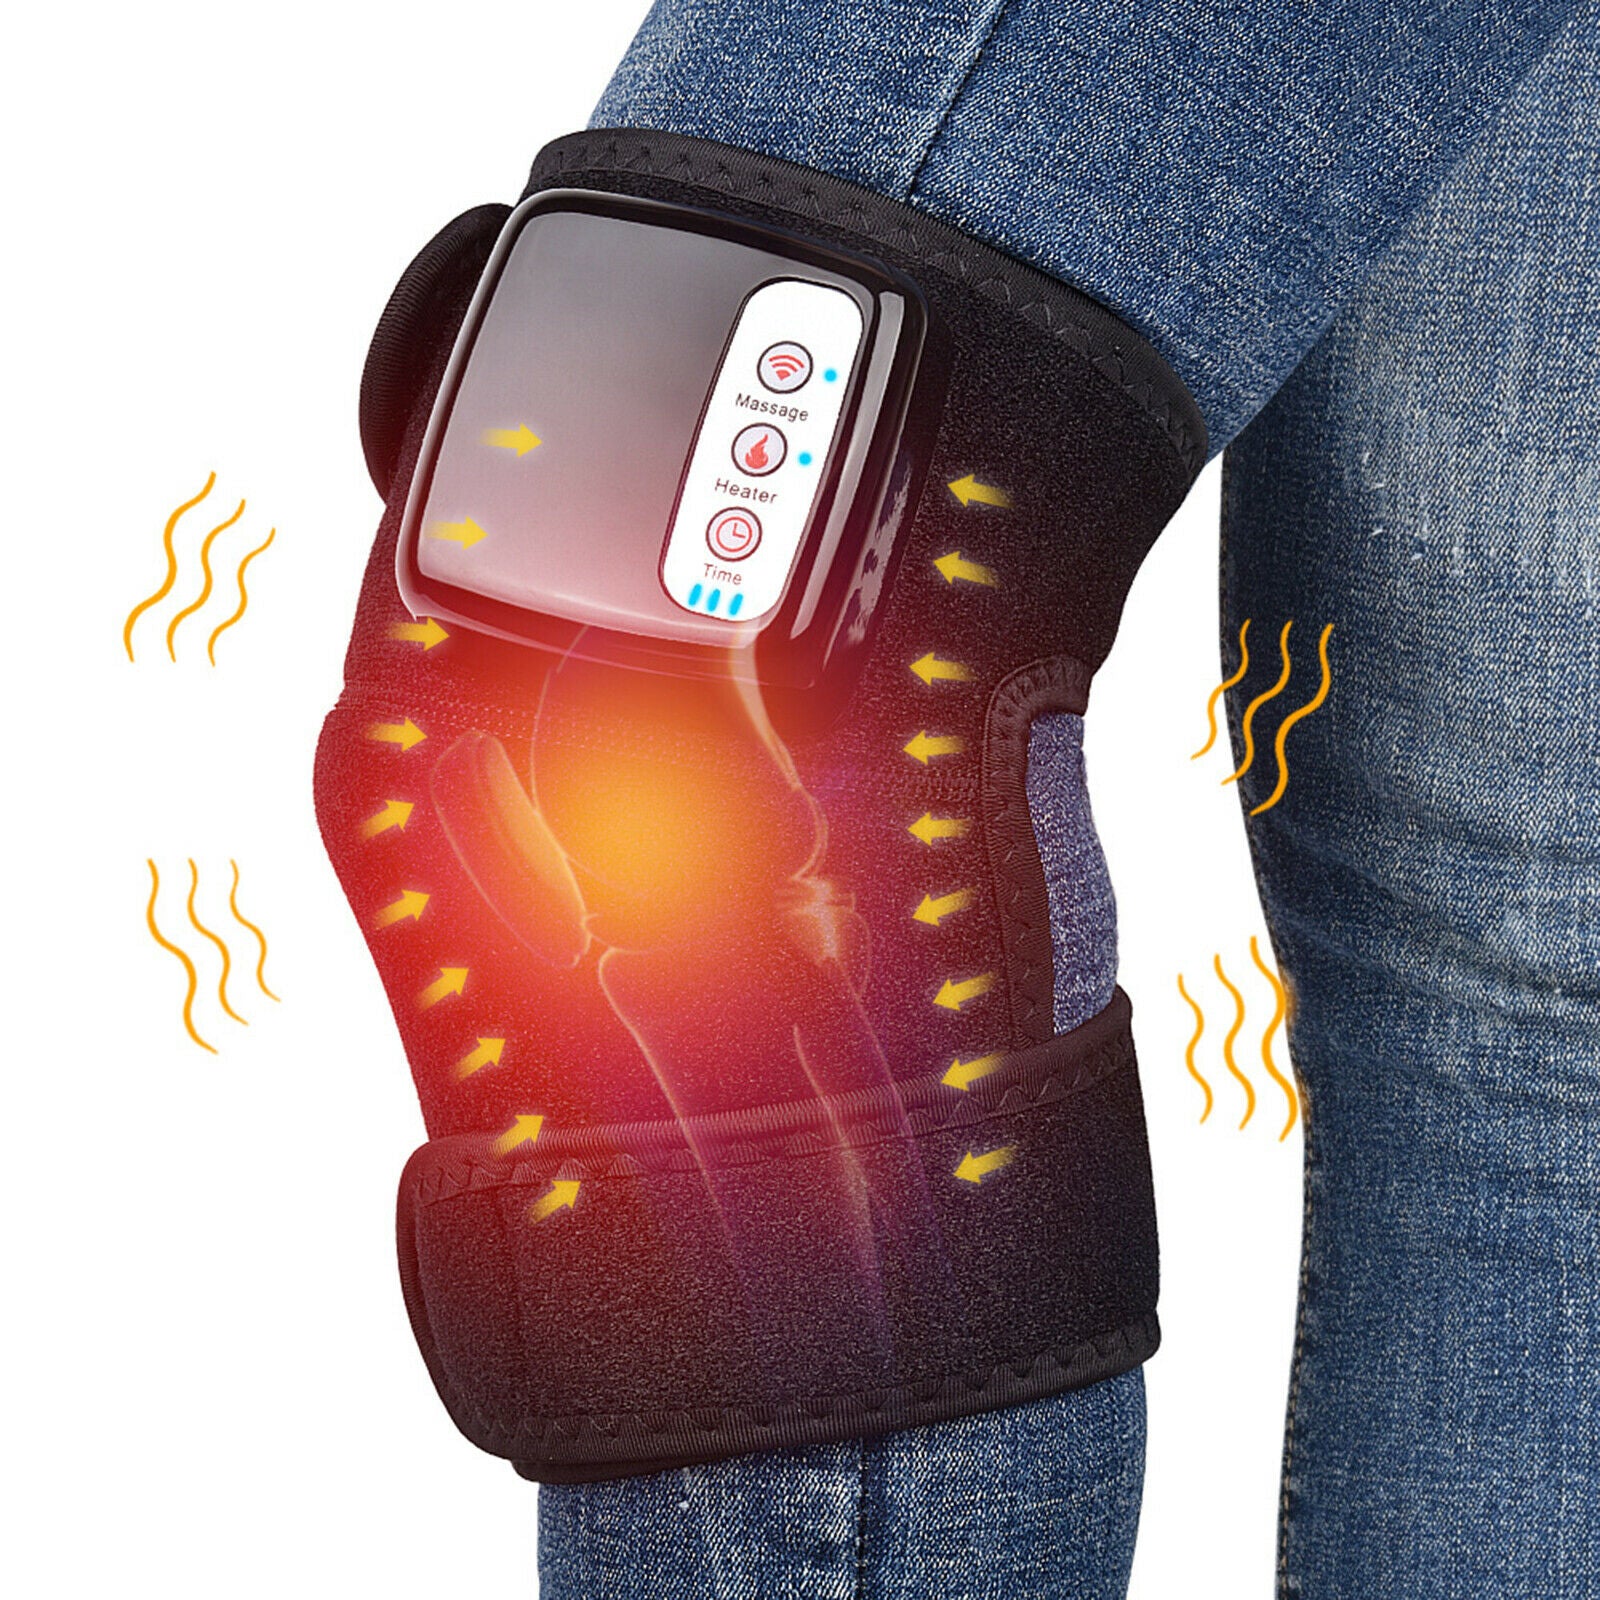 Electric Heated Knee Massager Arthritis Warm Therapy Legs Wrap Brace US Plug